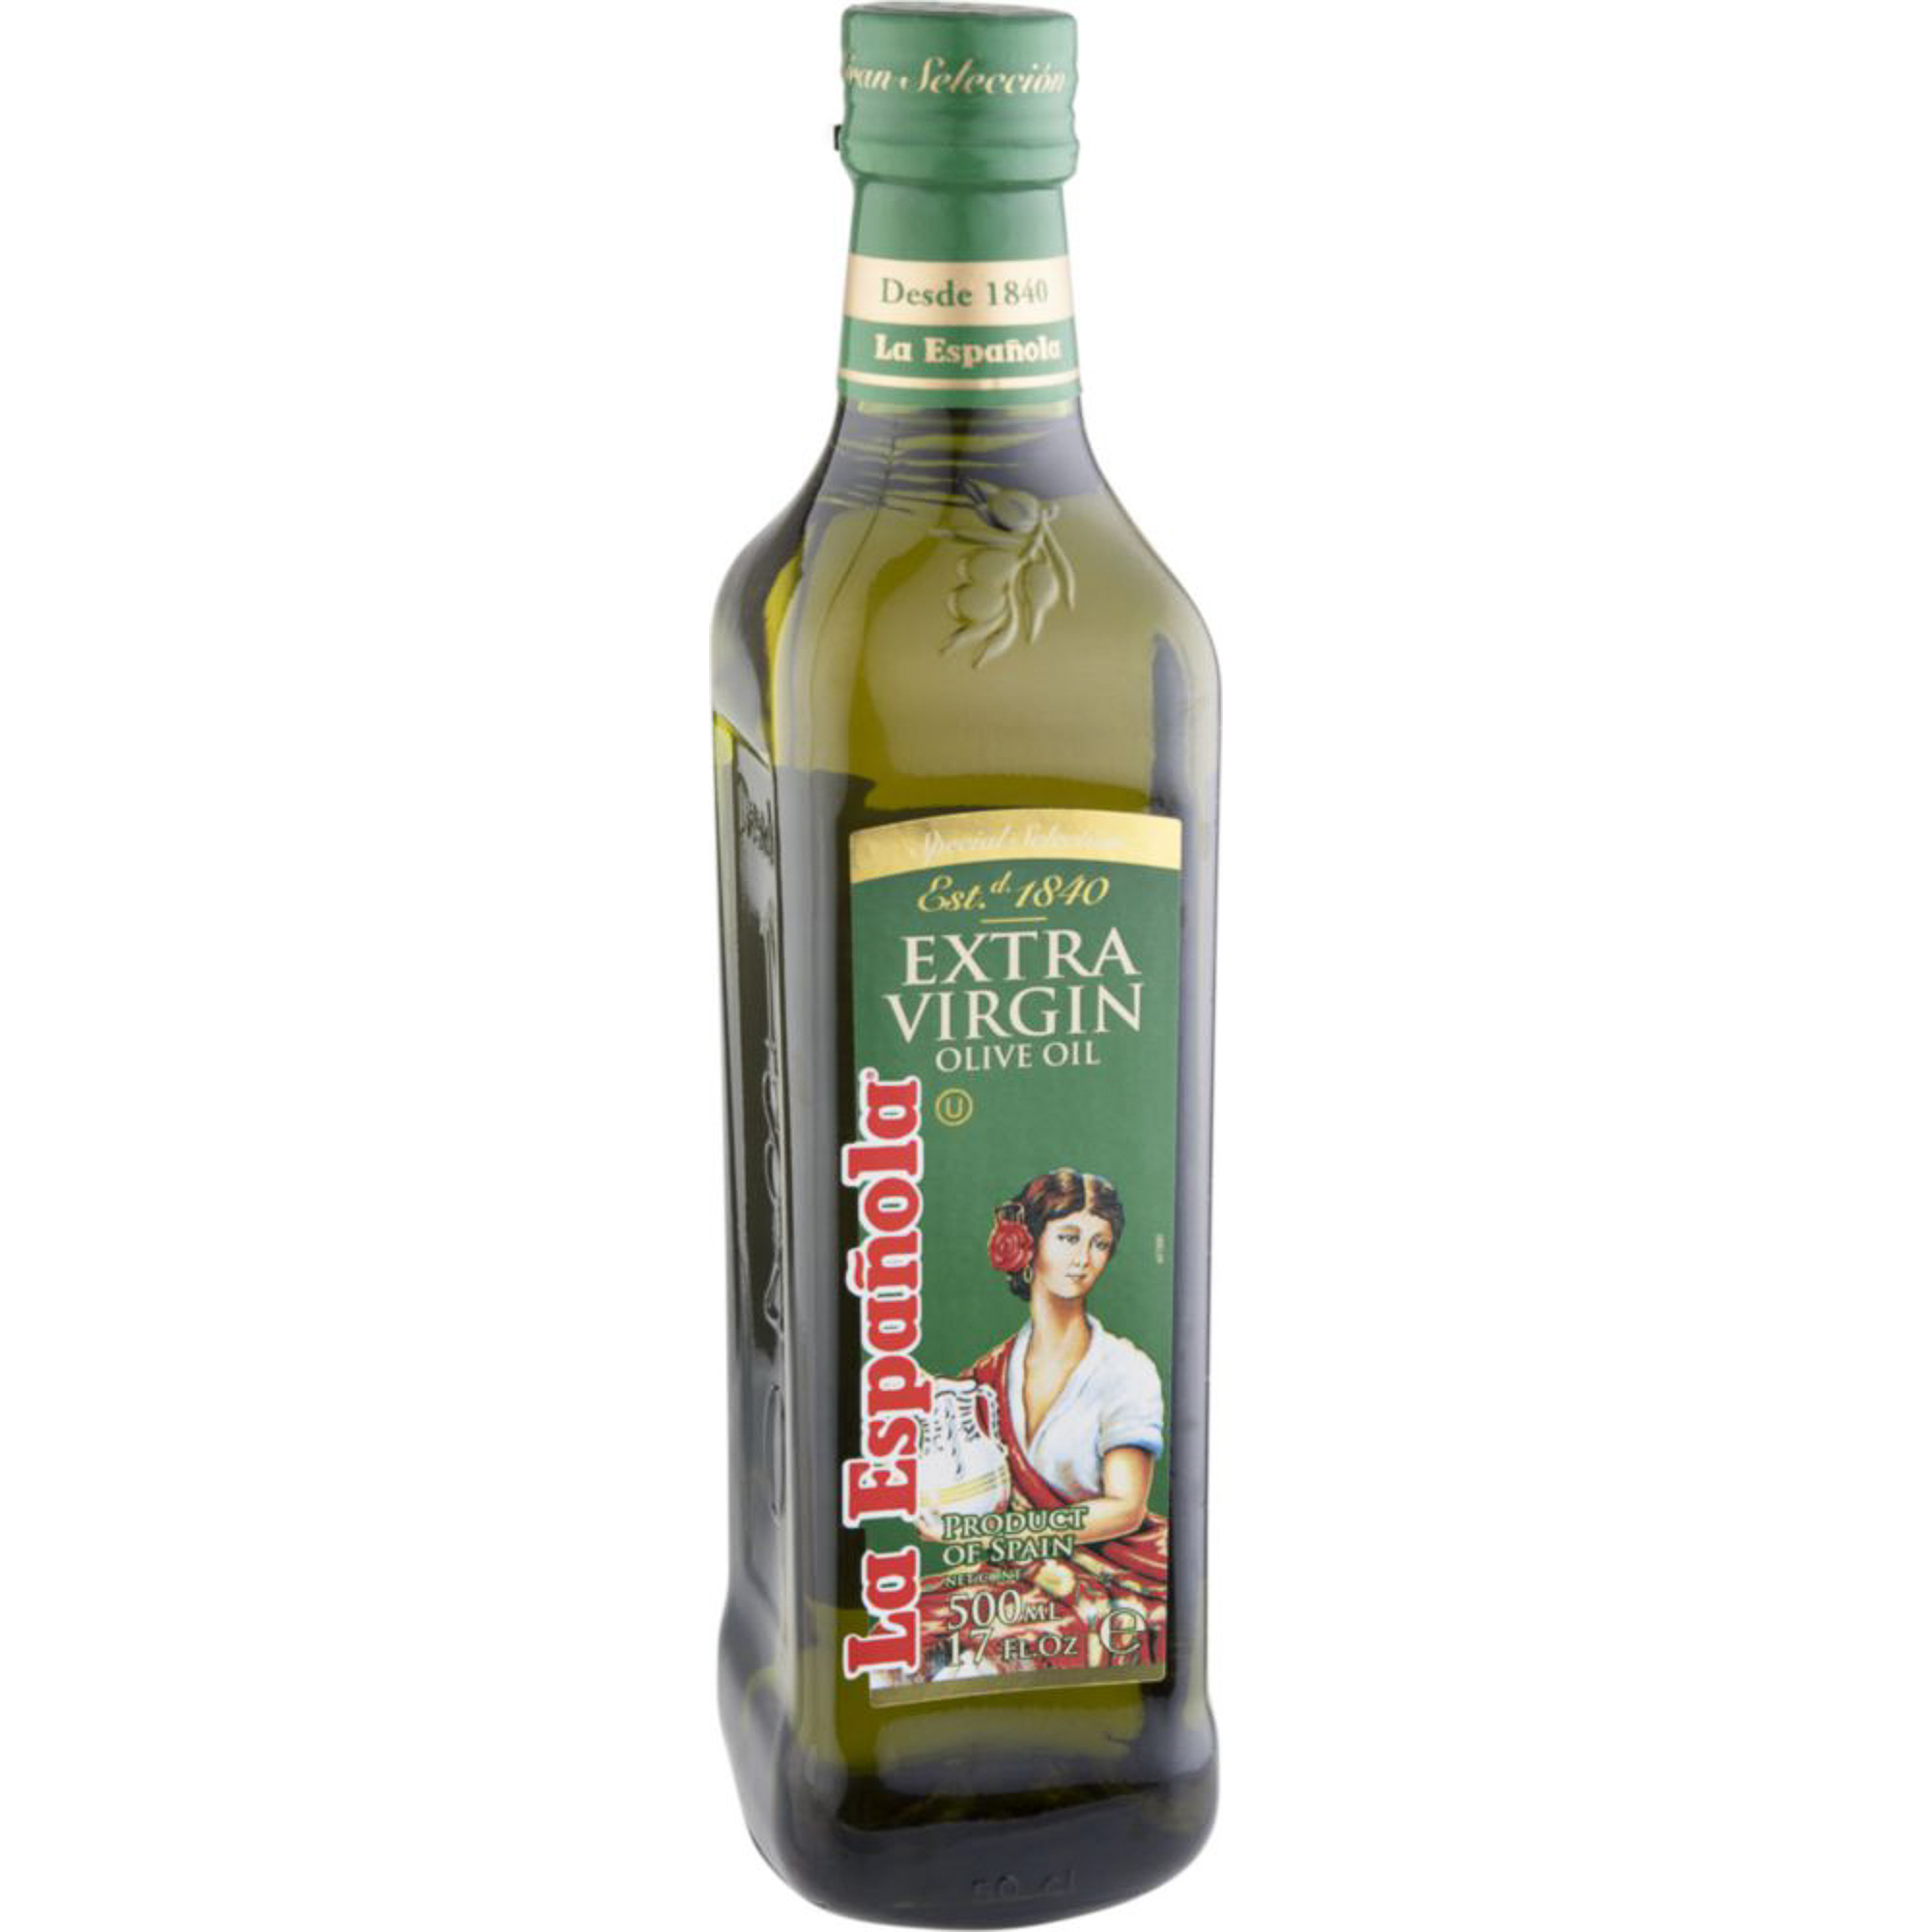 Метро оливковое масло. Масло оливковое ла Эспаньола. La espanola масло Extra Virgin. La espanola масло оливковое Extra Virgin. Масло оливковое la espanola 500.